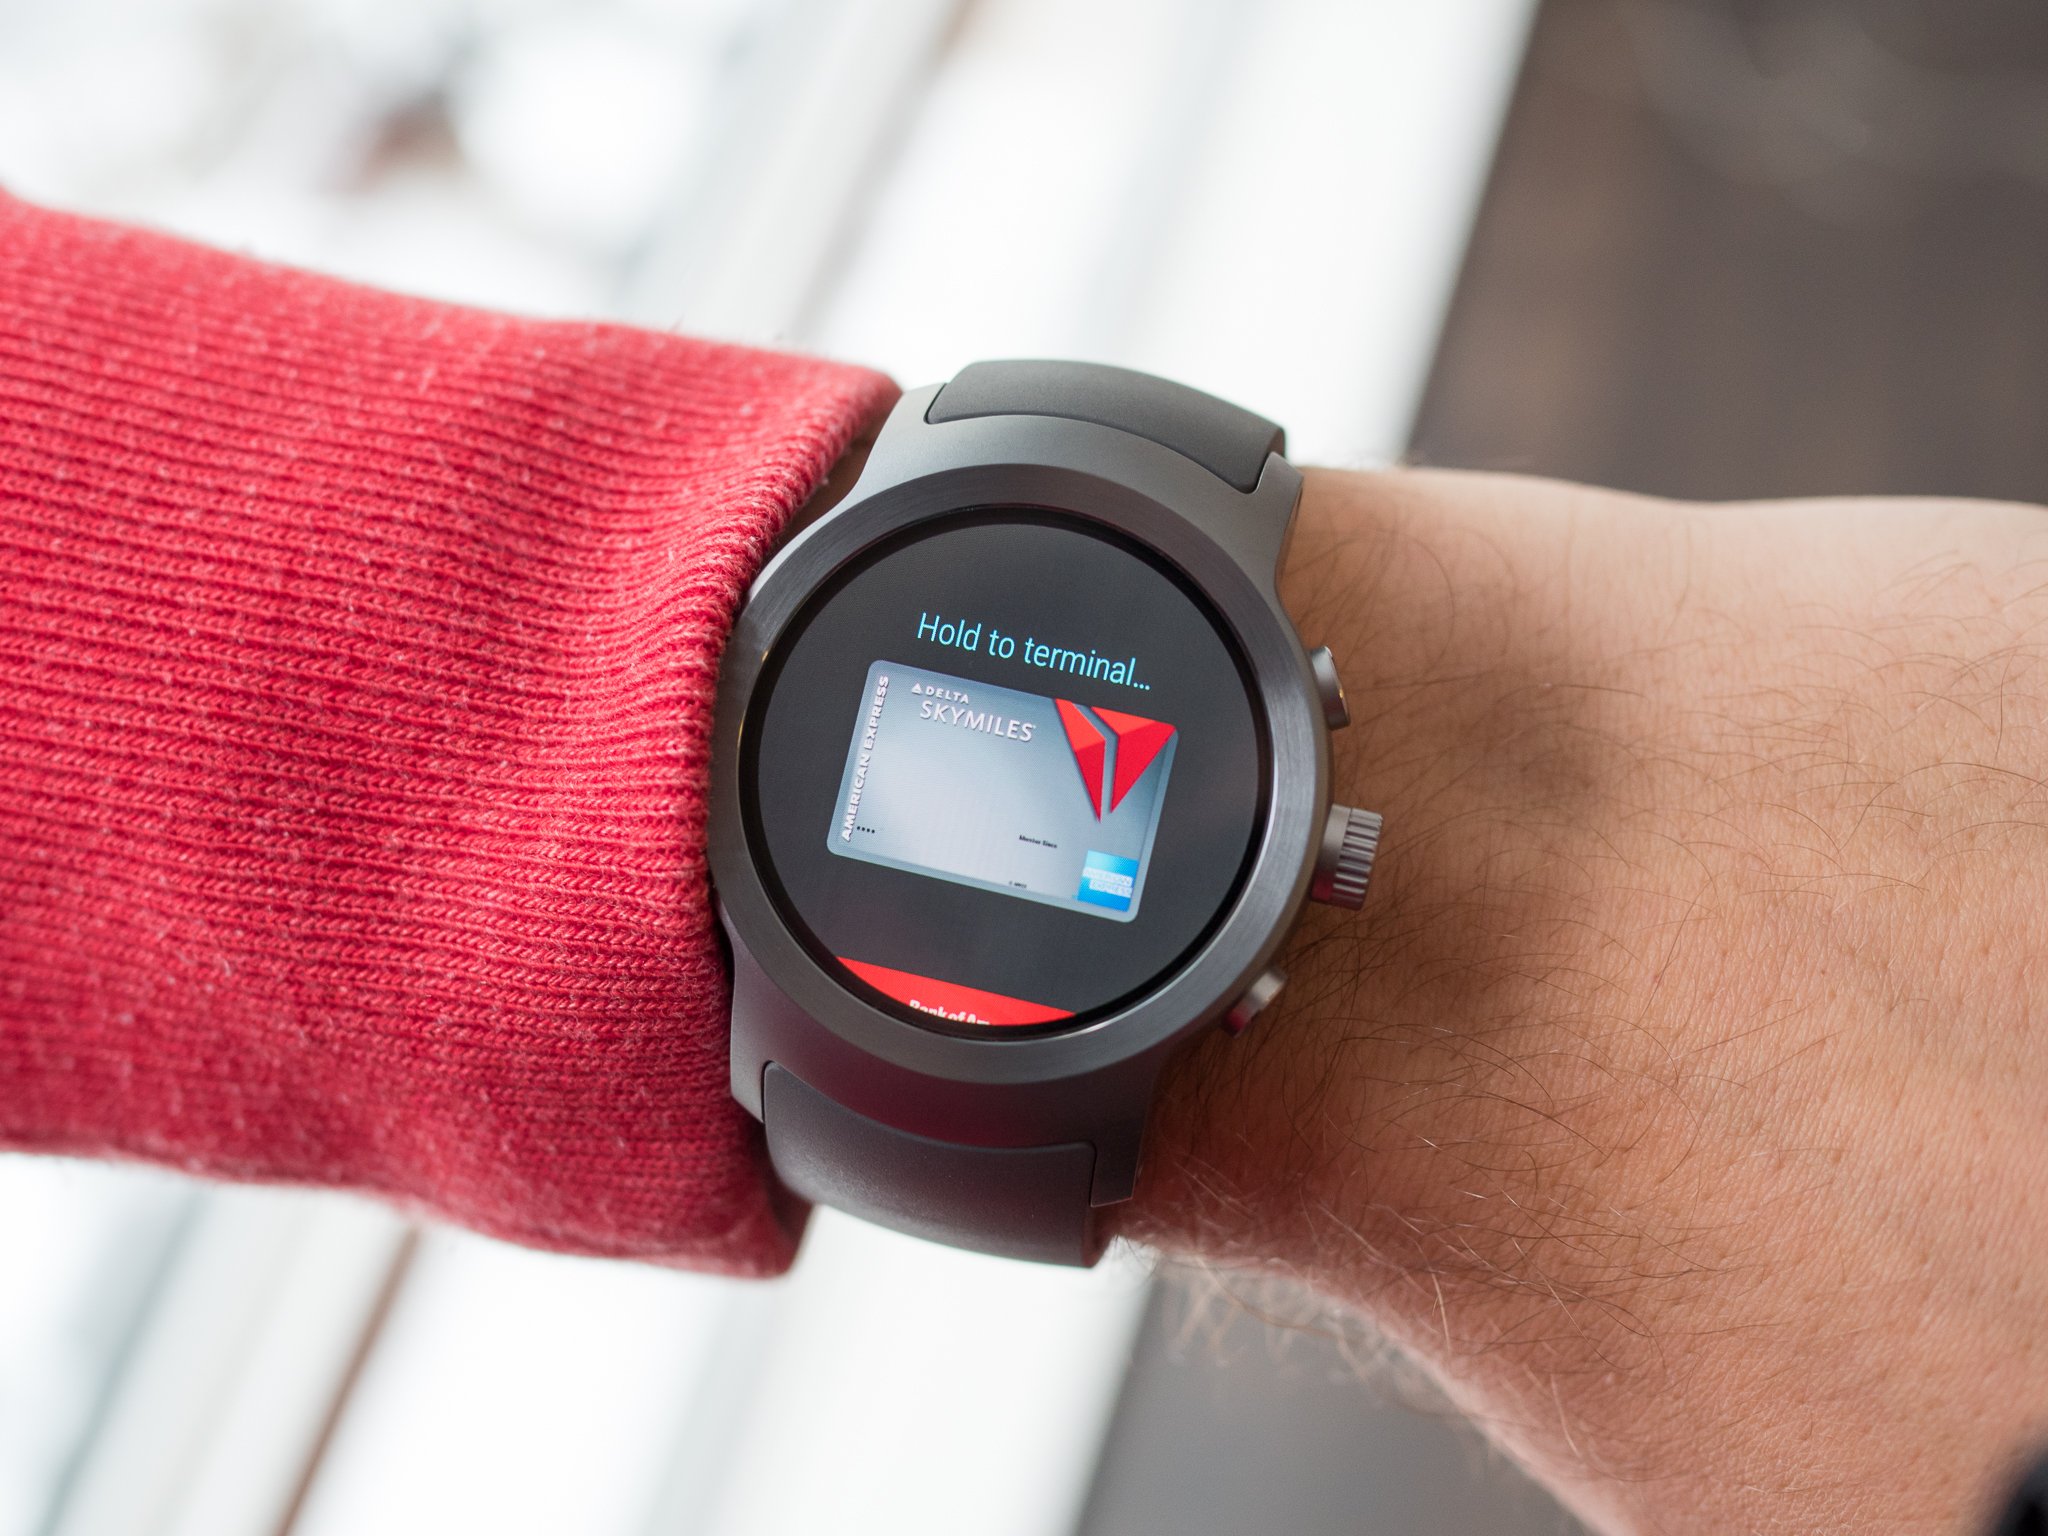 Galaxy watch оплата. Wear os часы. Смарт часы с гуглом. Часы на Wear os 2022. Часы с NFC для оплаты Android.